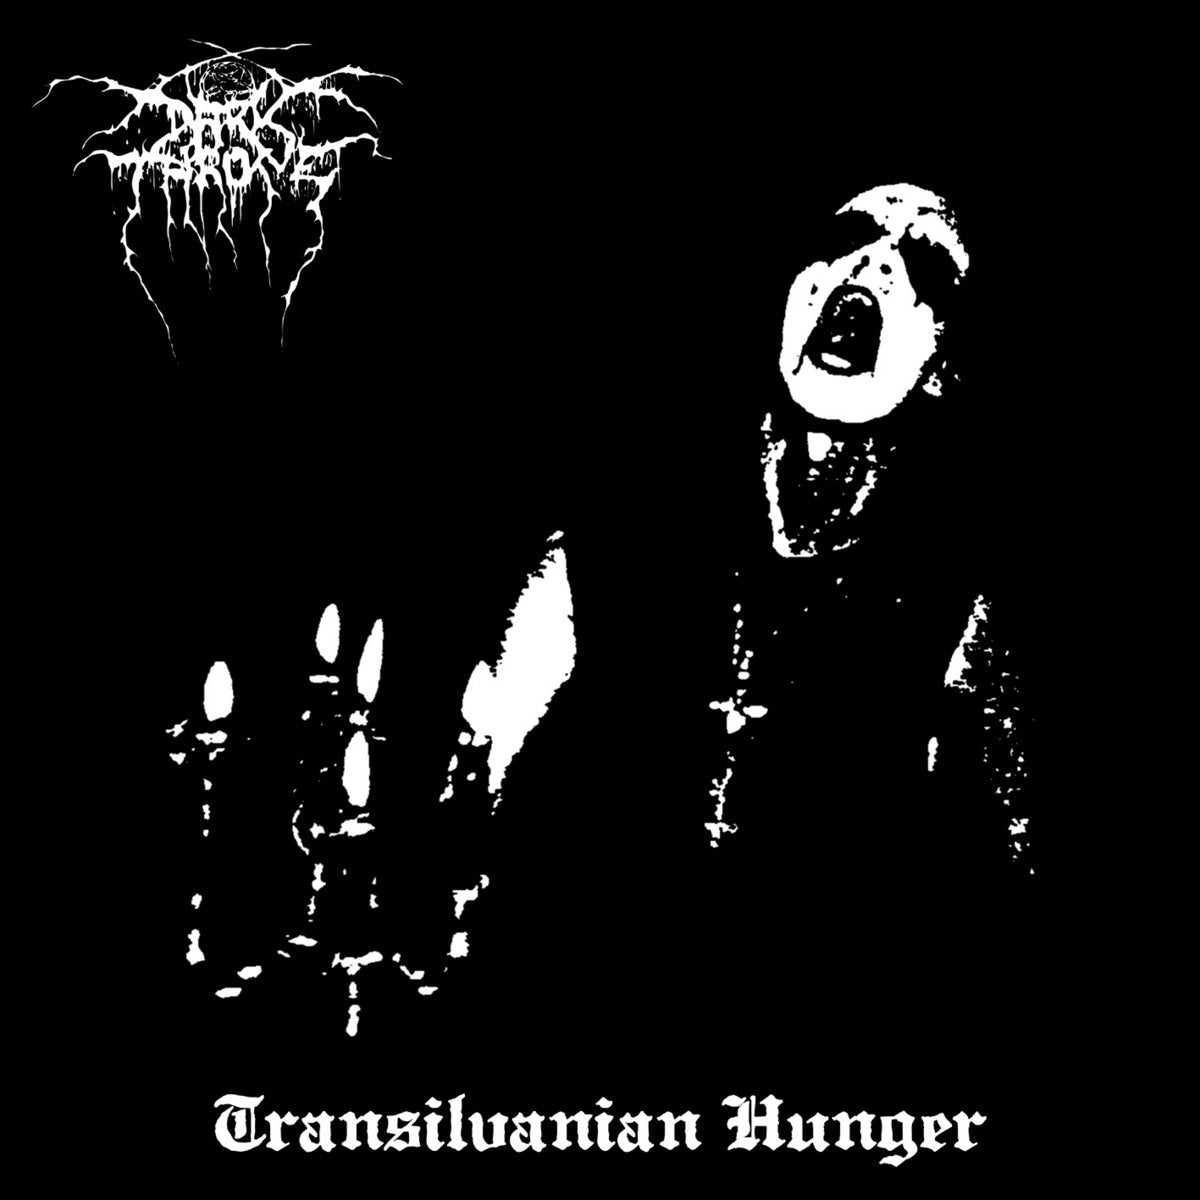 [SOLD OUT] DARKTHRONE "Transilvanian Hunger" CD